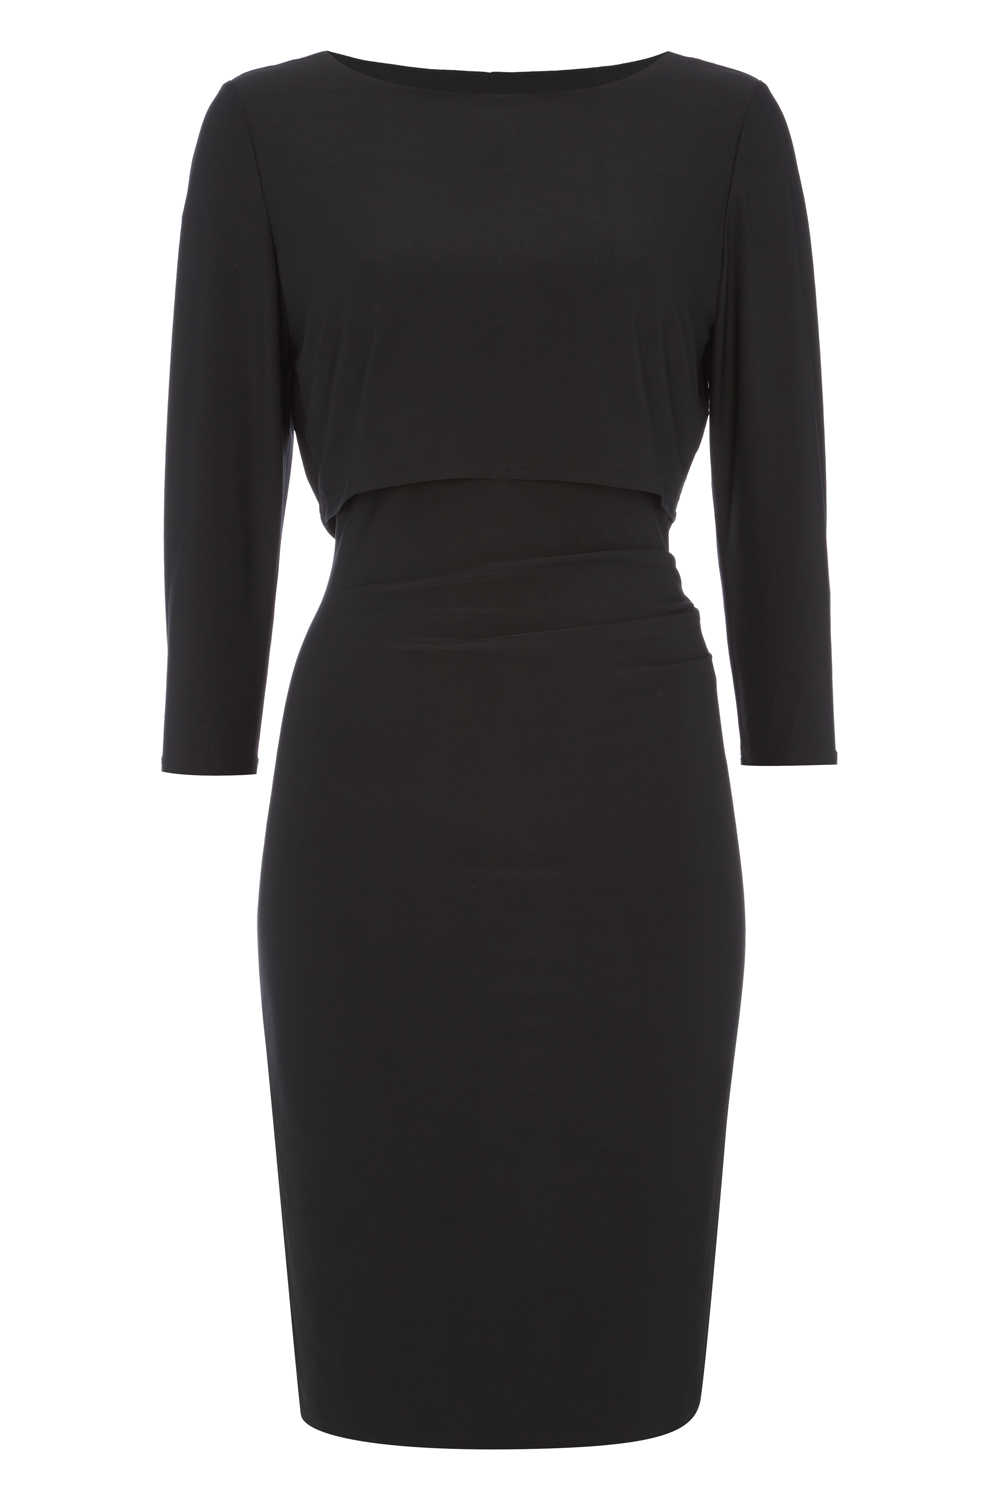 Ruched Detail Jersey Dress in Black - Roman Originals UK